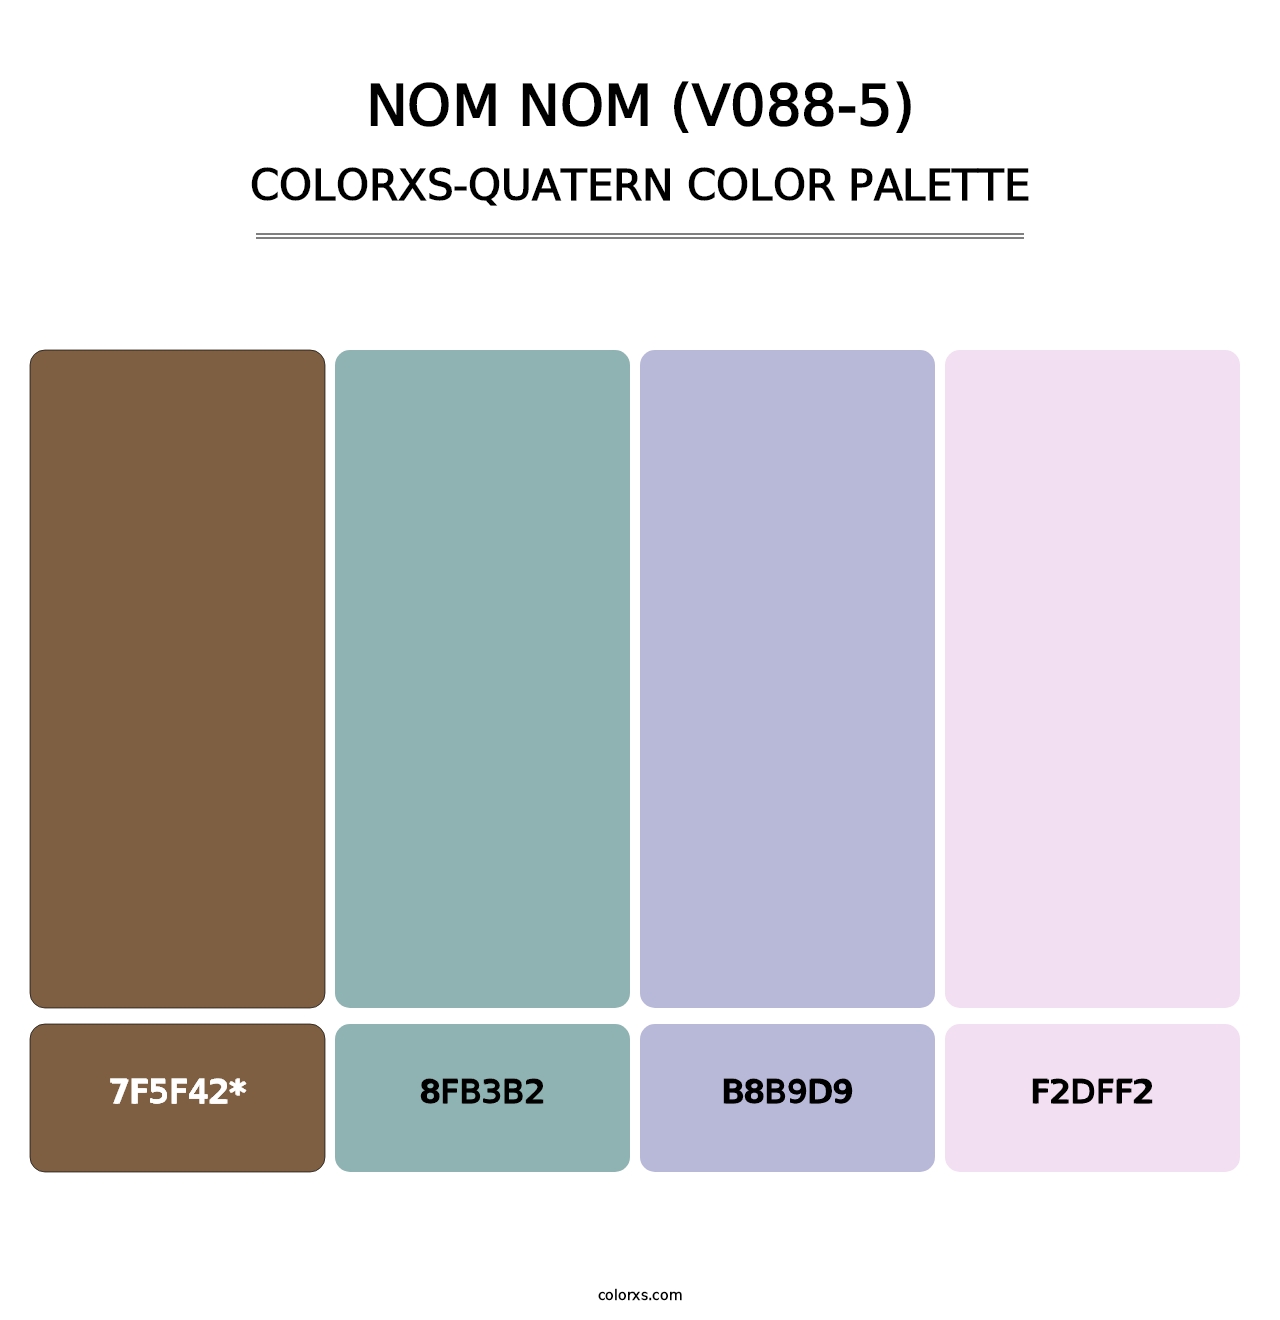 Nom Nom (V088-5) - Colorxs Quatern Palette